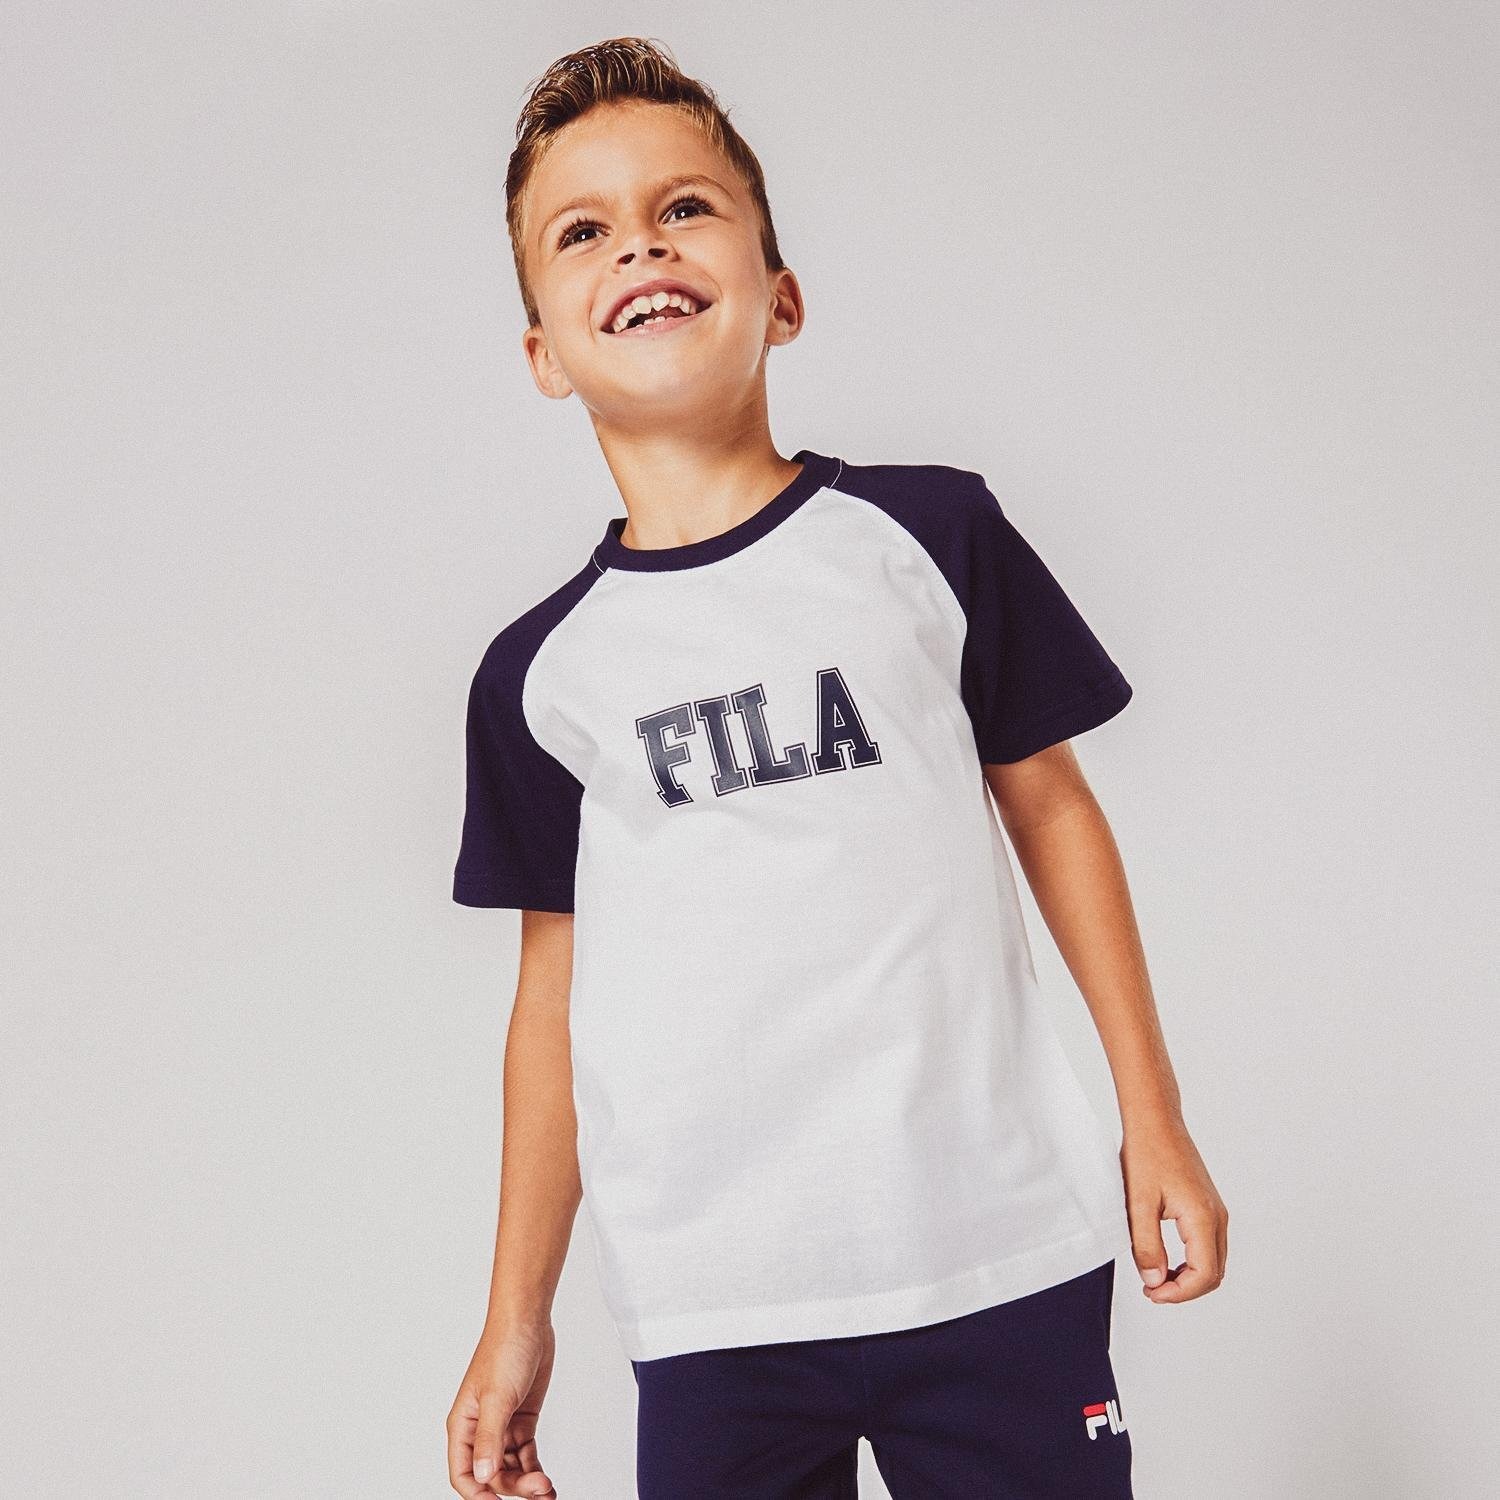 Fila Fila julius shirt wit/blauw kinderen kinderen